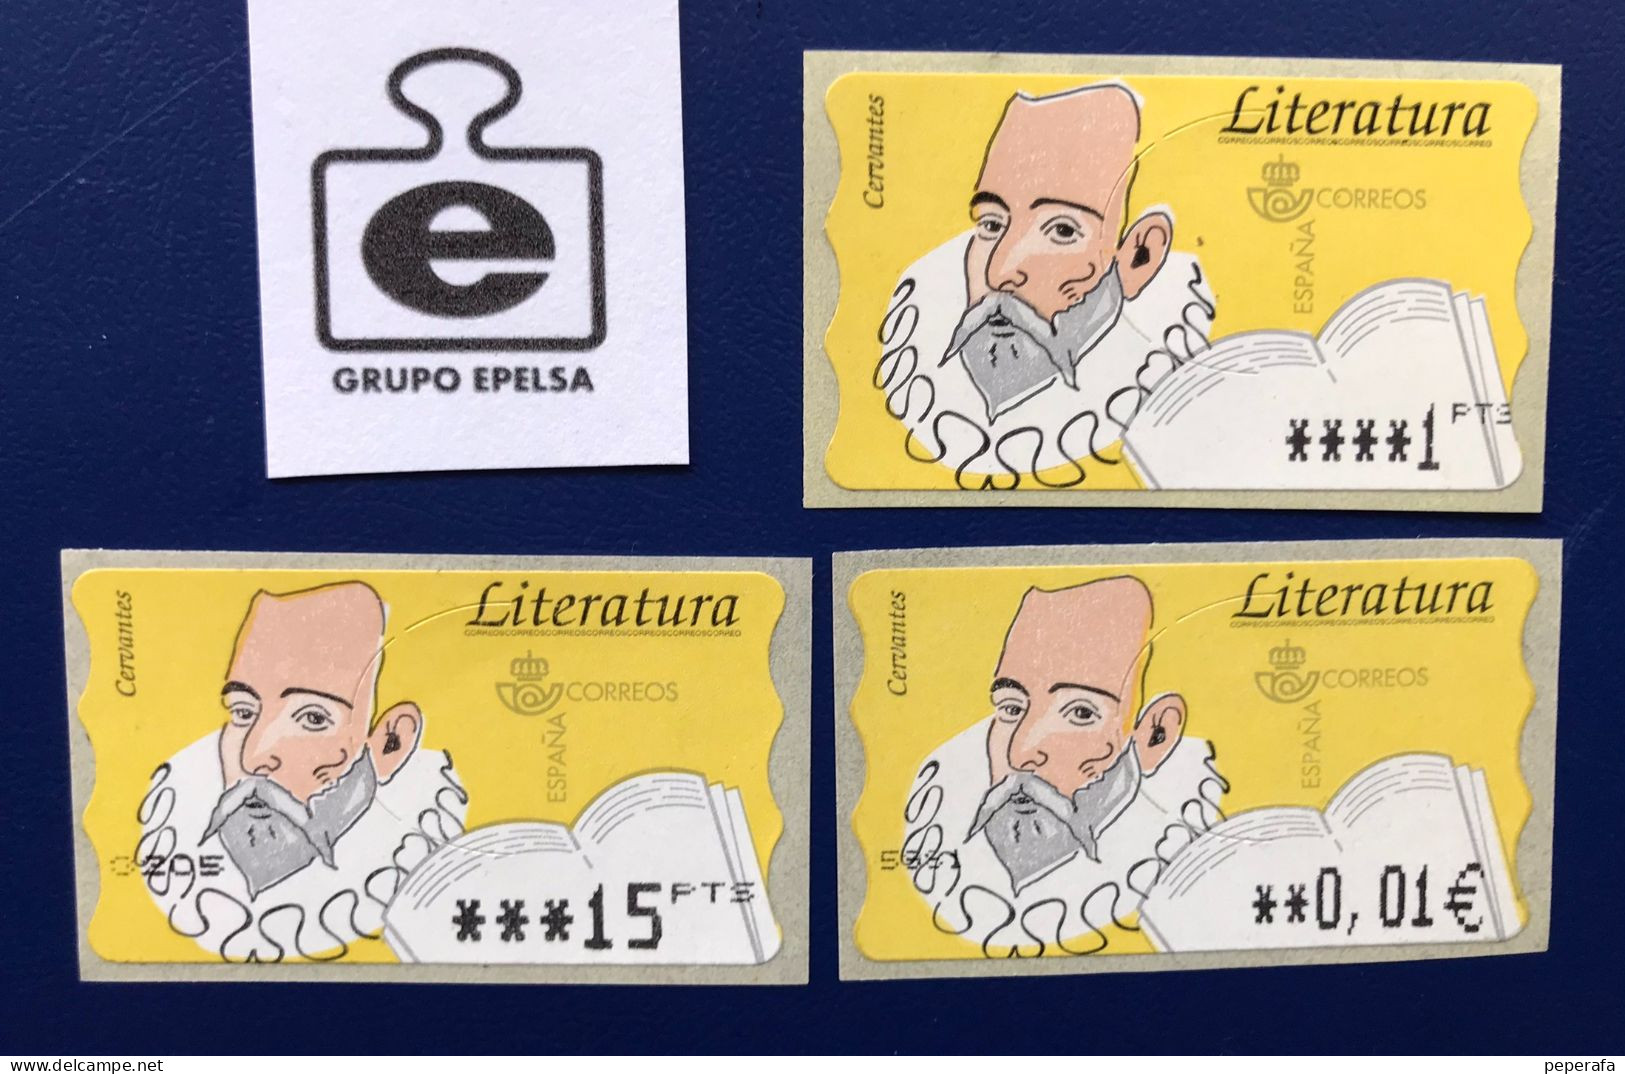 España Spain 1996, LITERATURA CERVANTES, ATM EPELSA, 3 ATM, PAPEL FOSFORESCENTE, NUEVO PTS / EURO - Vignette [ATM]